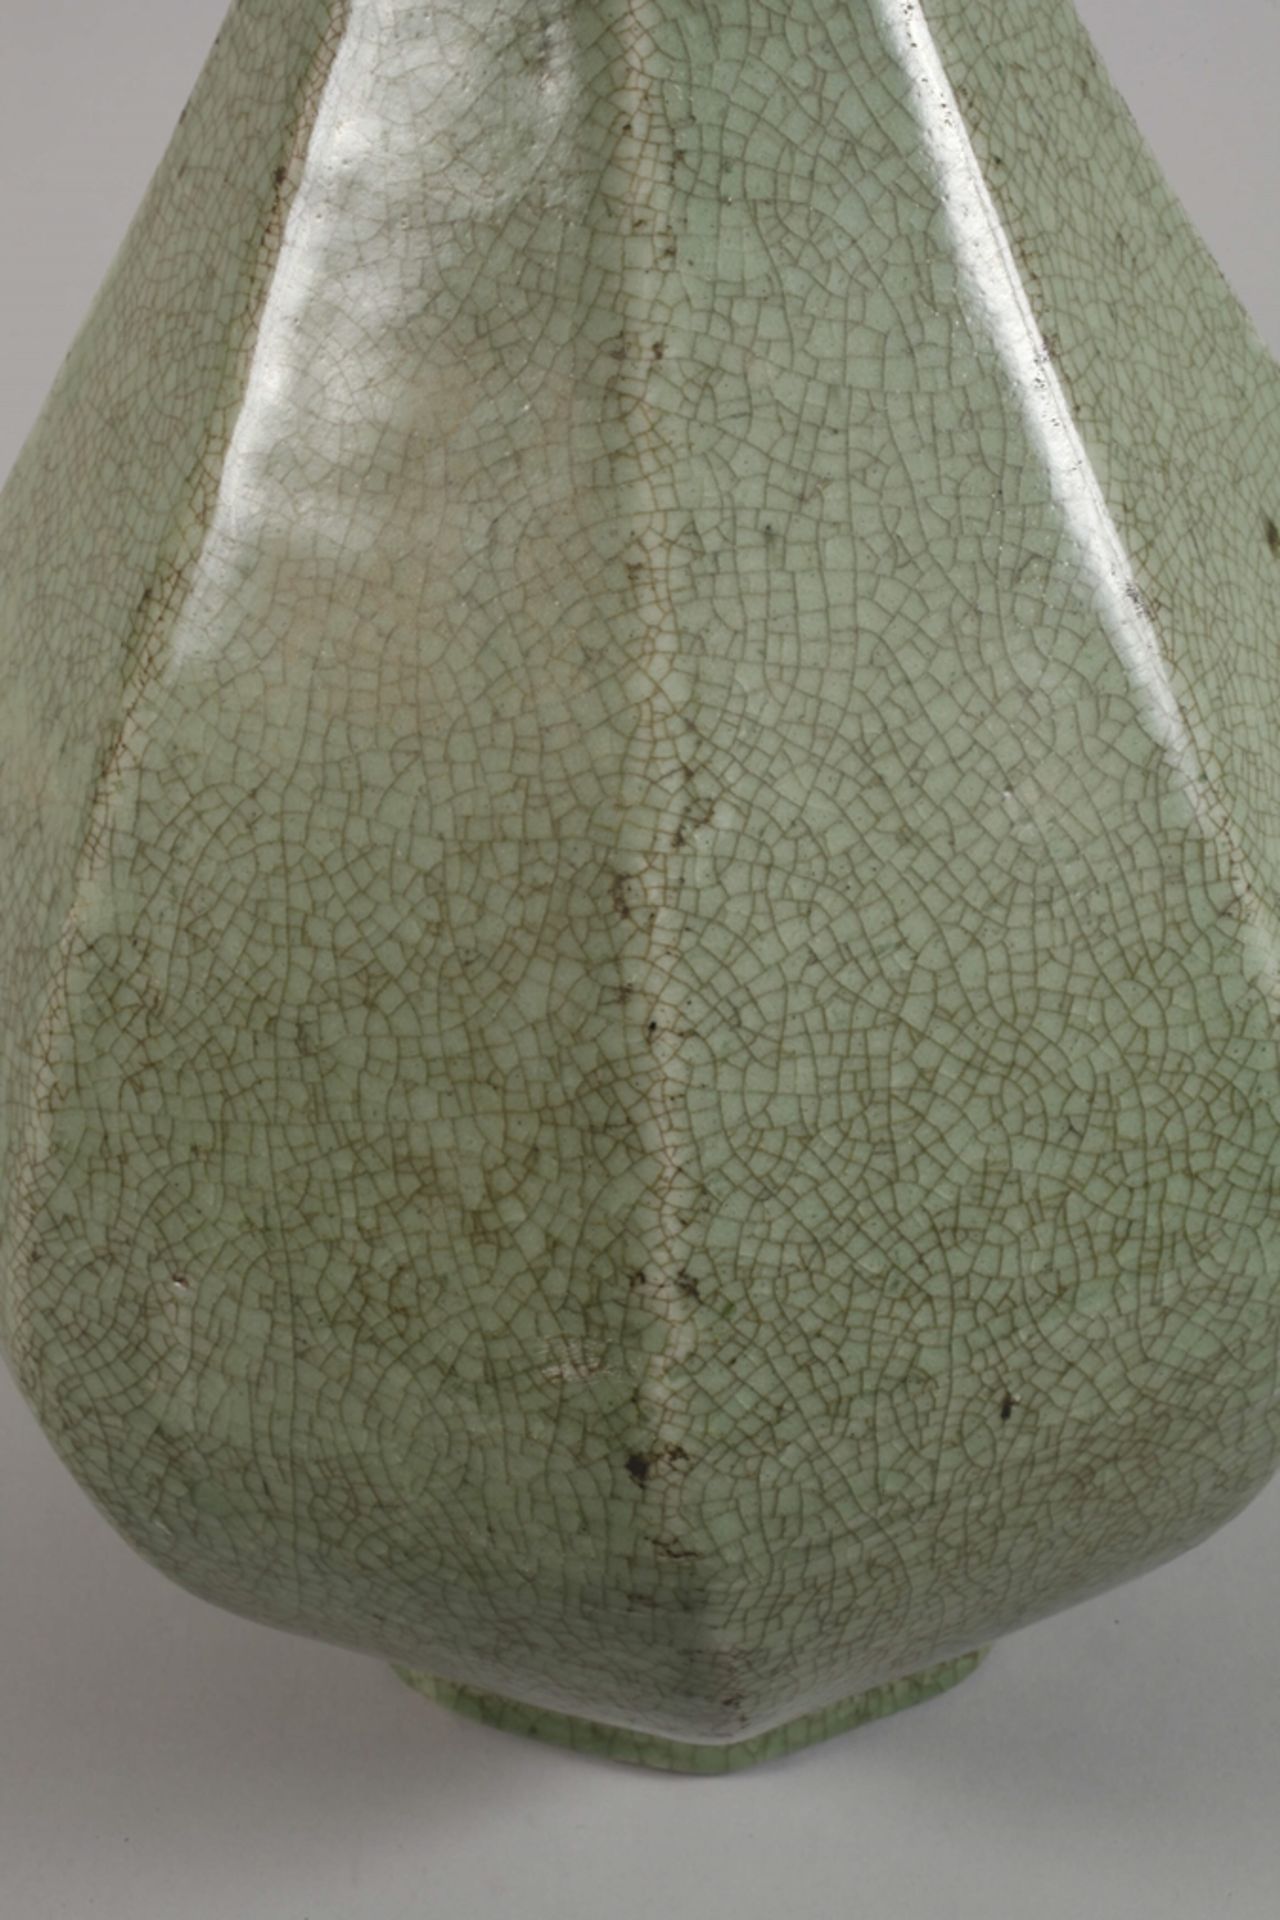 Qing Dynasty vase - Image 3 of 5